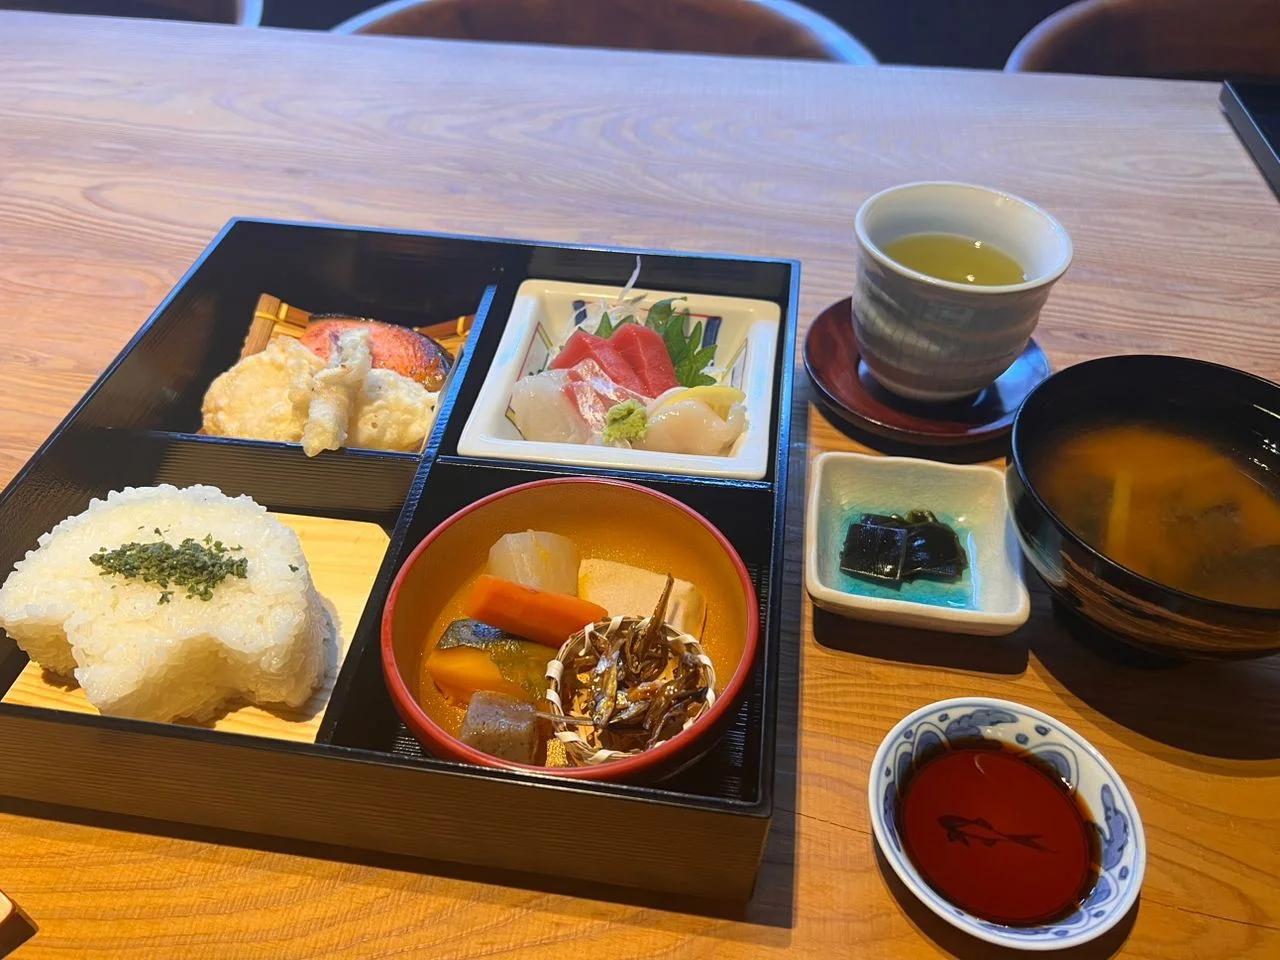 Meal from Tokitarazu